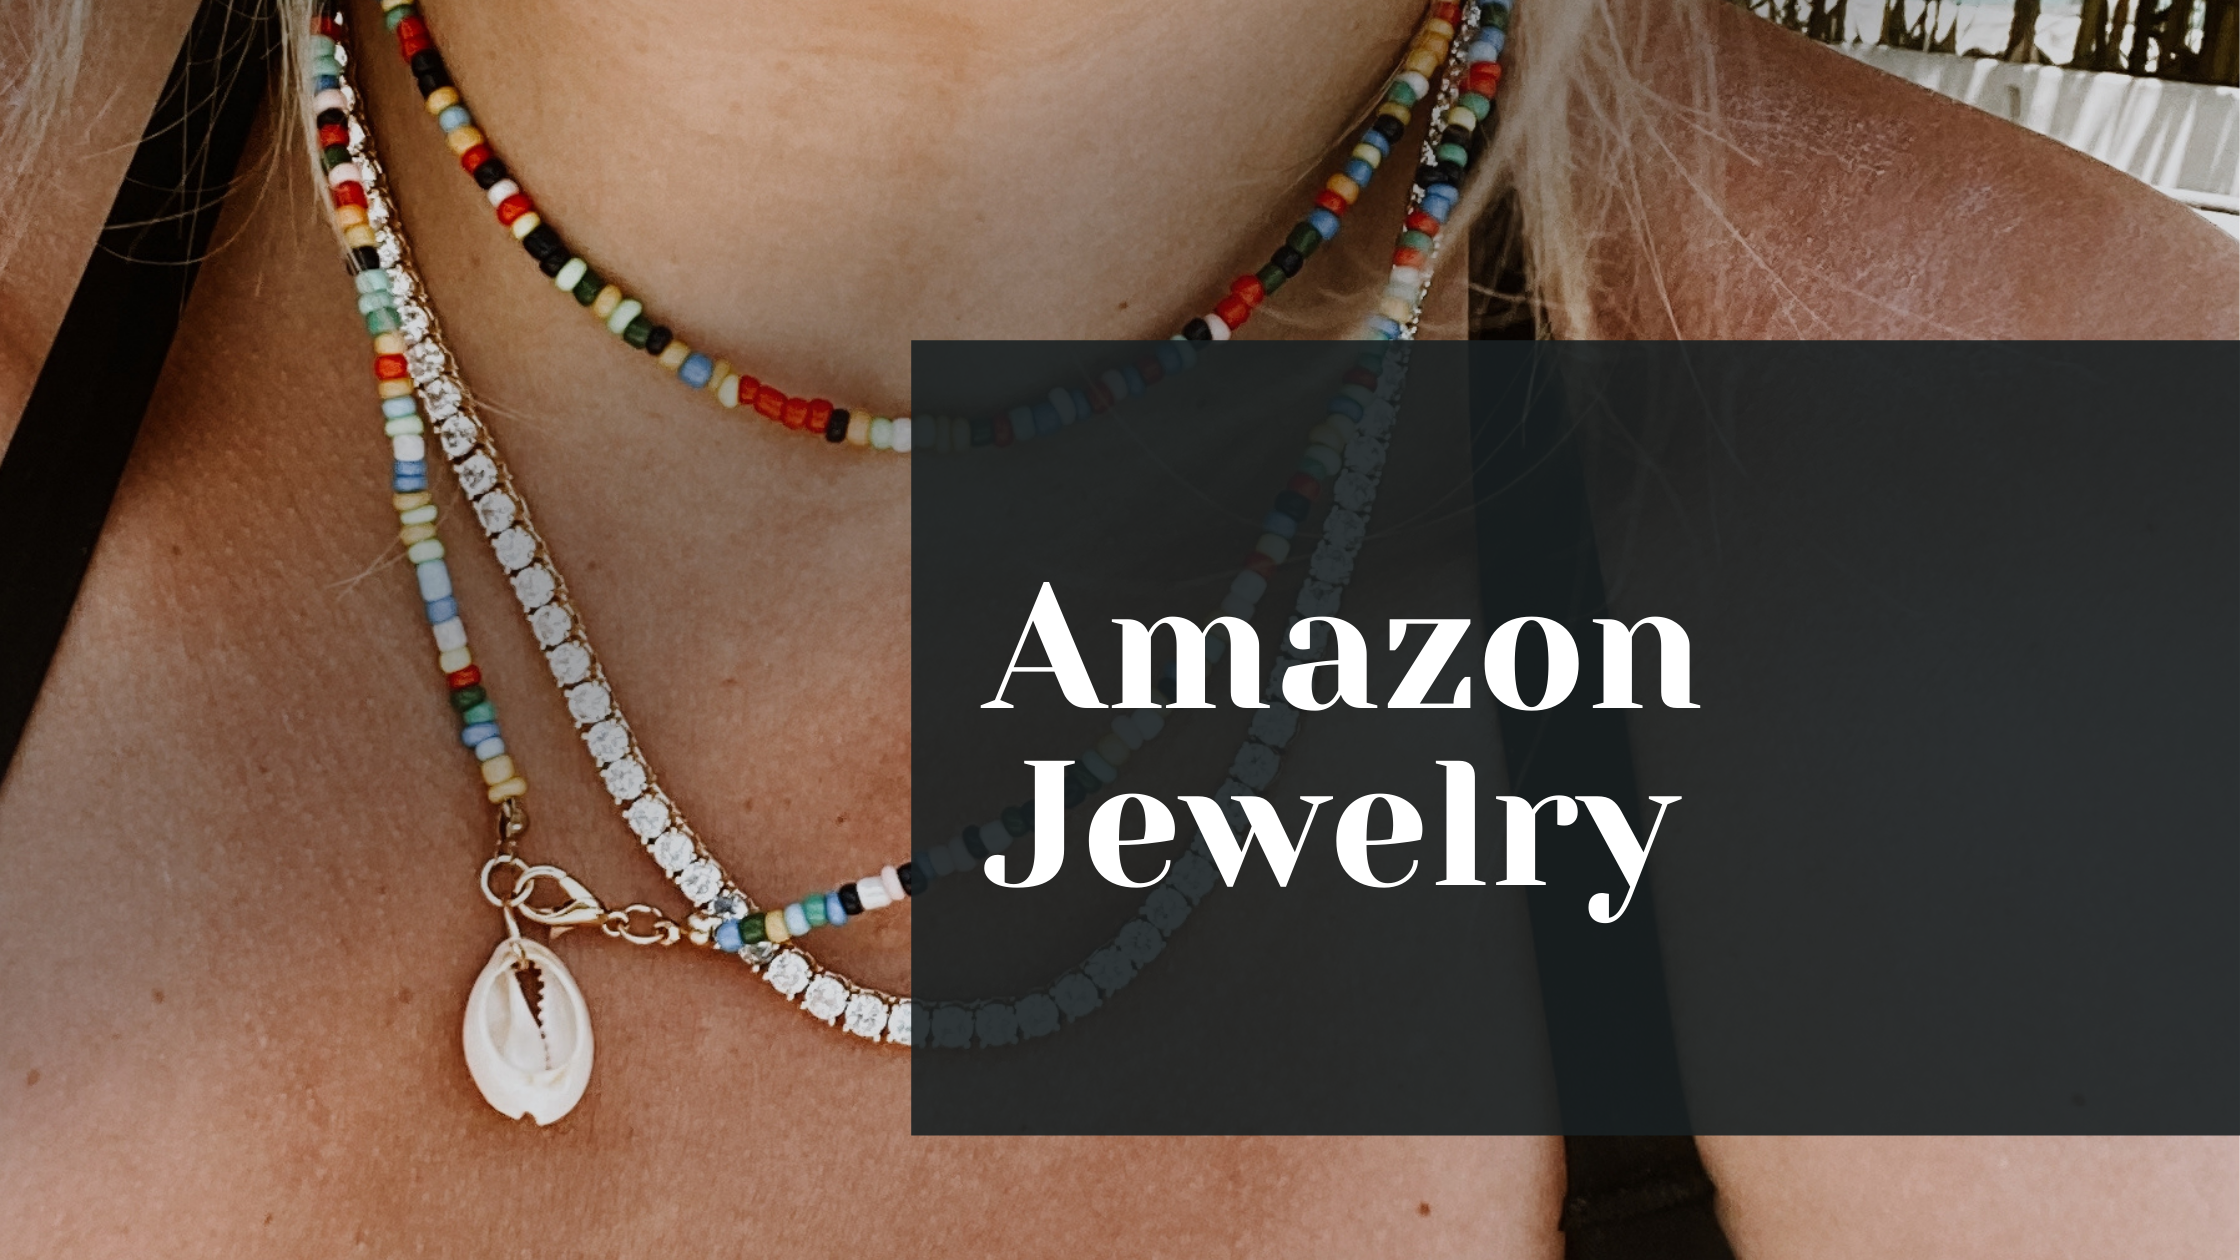 Amazon Jewelry, Amazon Necklace, Amazon Tennis Necklace, Amazon Prime